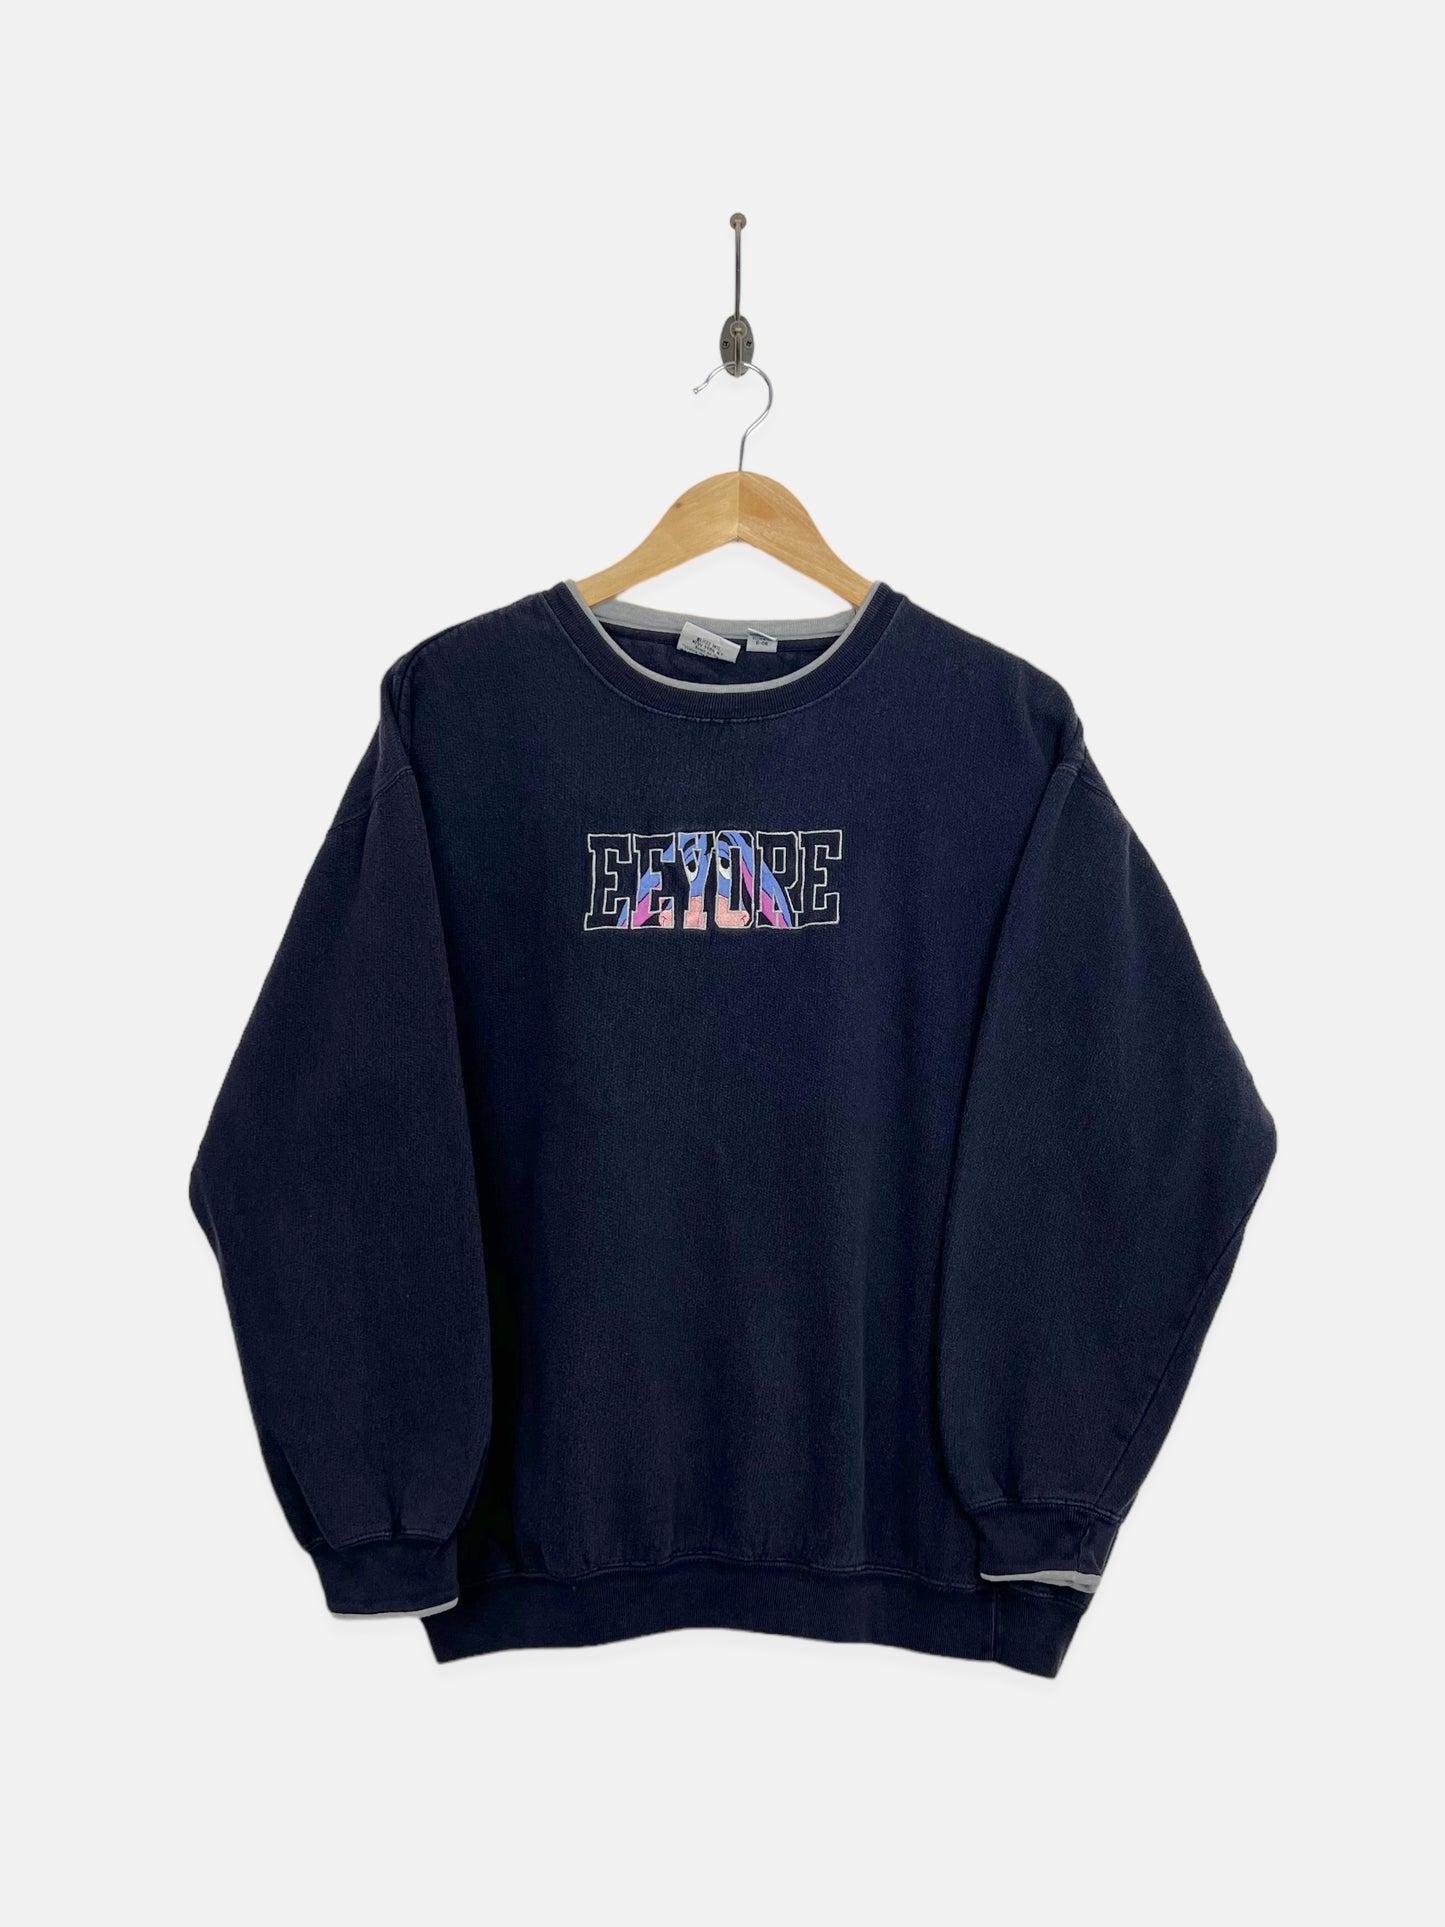 90's Disney Eeyore Embroidered Vintage Sweatshirt Size 8-10